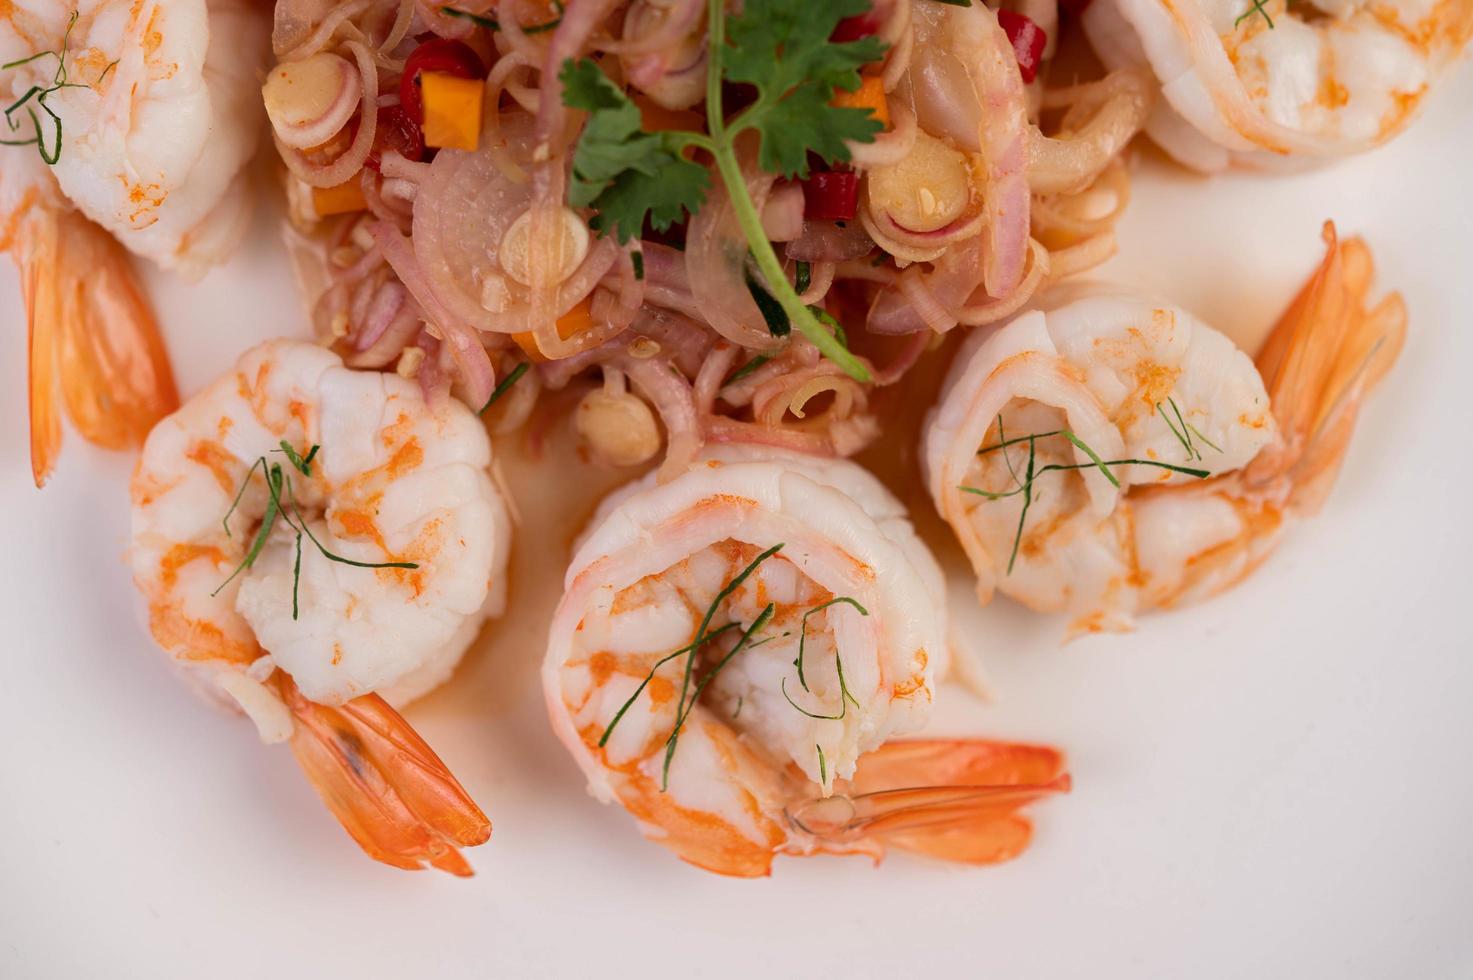 Spicy Thai salad with shrimp photo